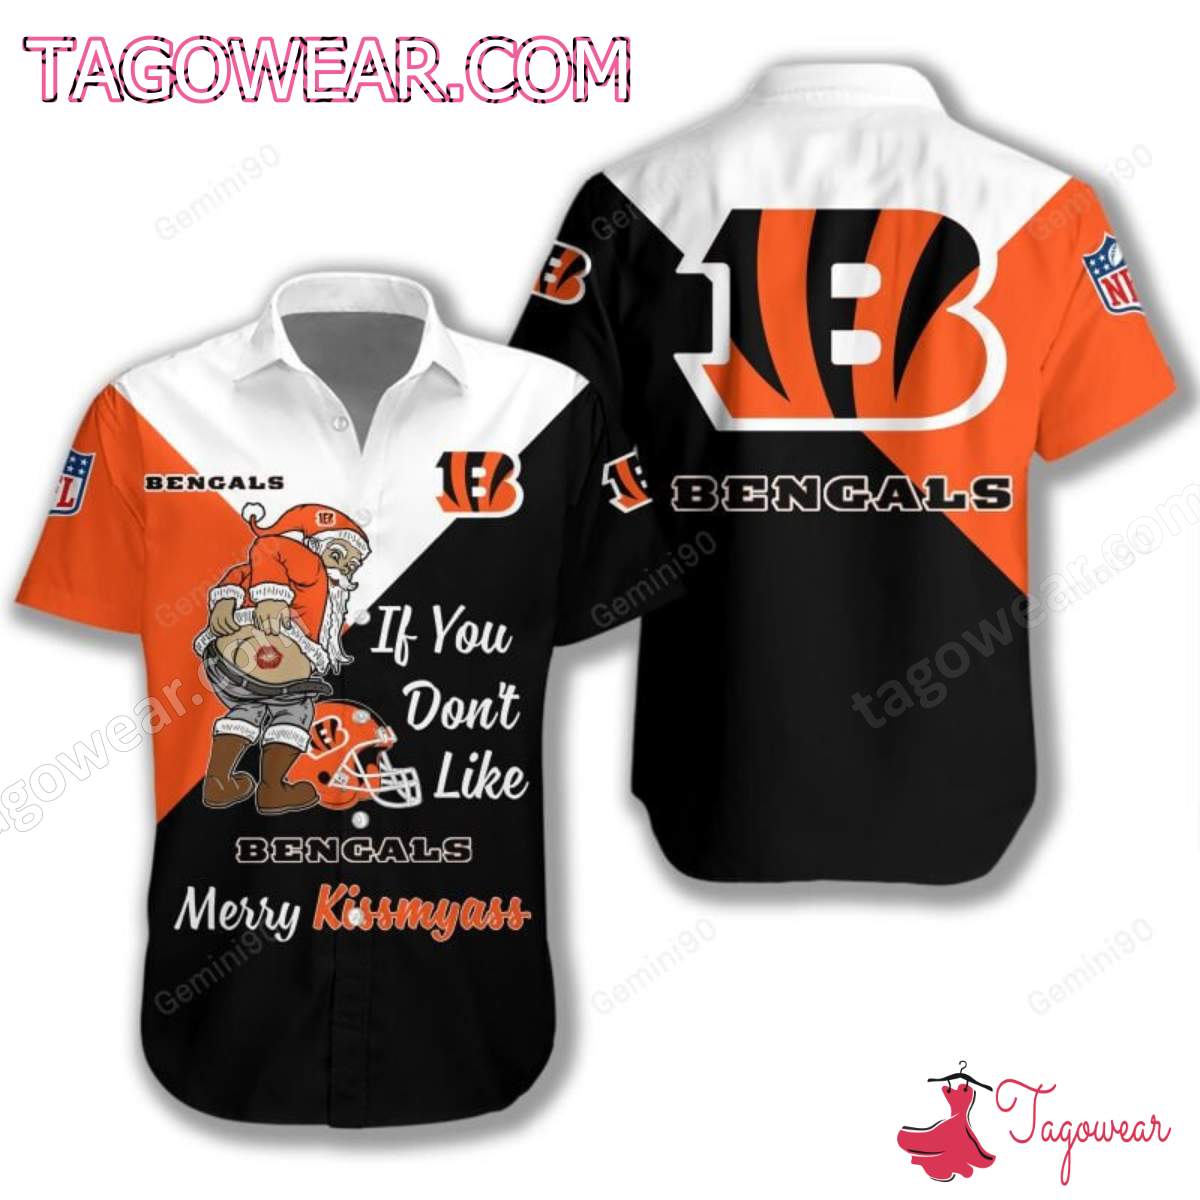 If You Don't Like Cincinnati Bengals Merry Kissmyass T-shirt, Polo, Hoodie a